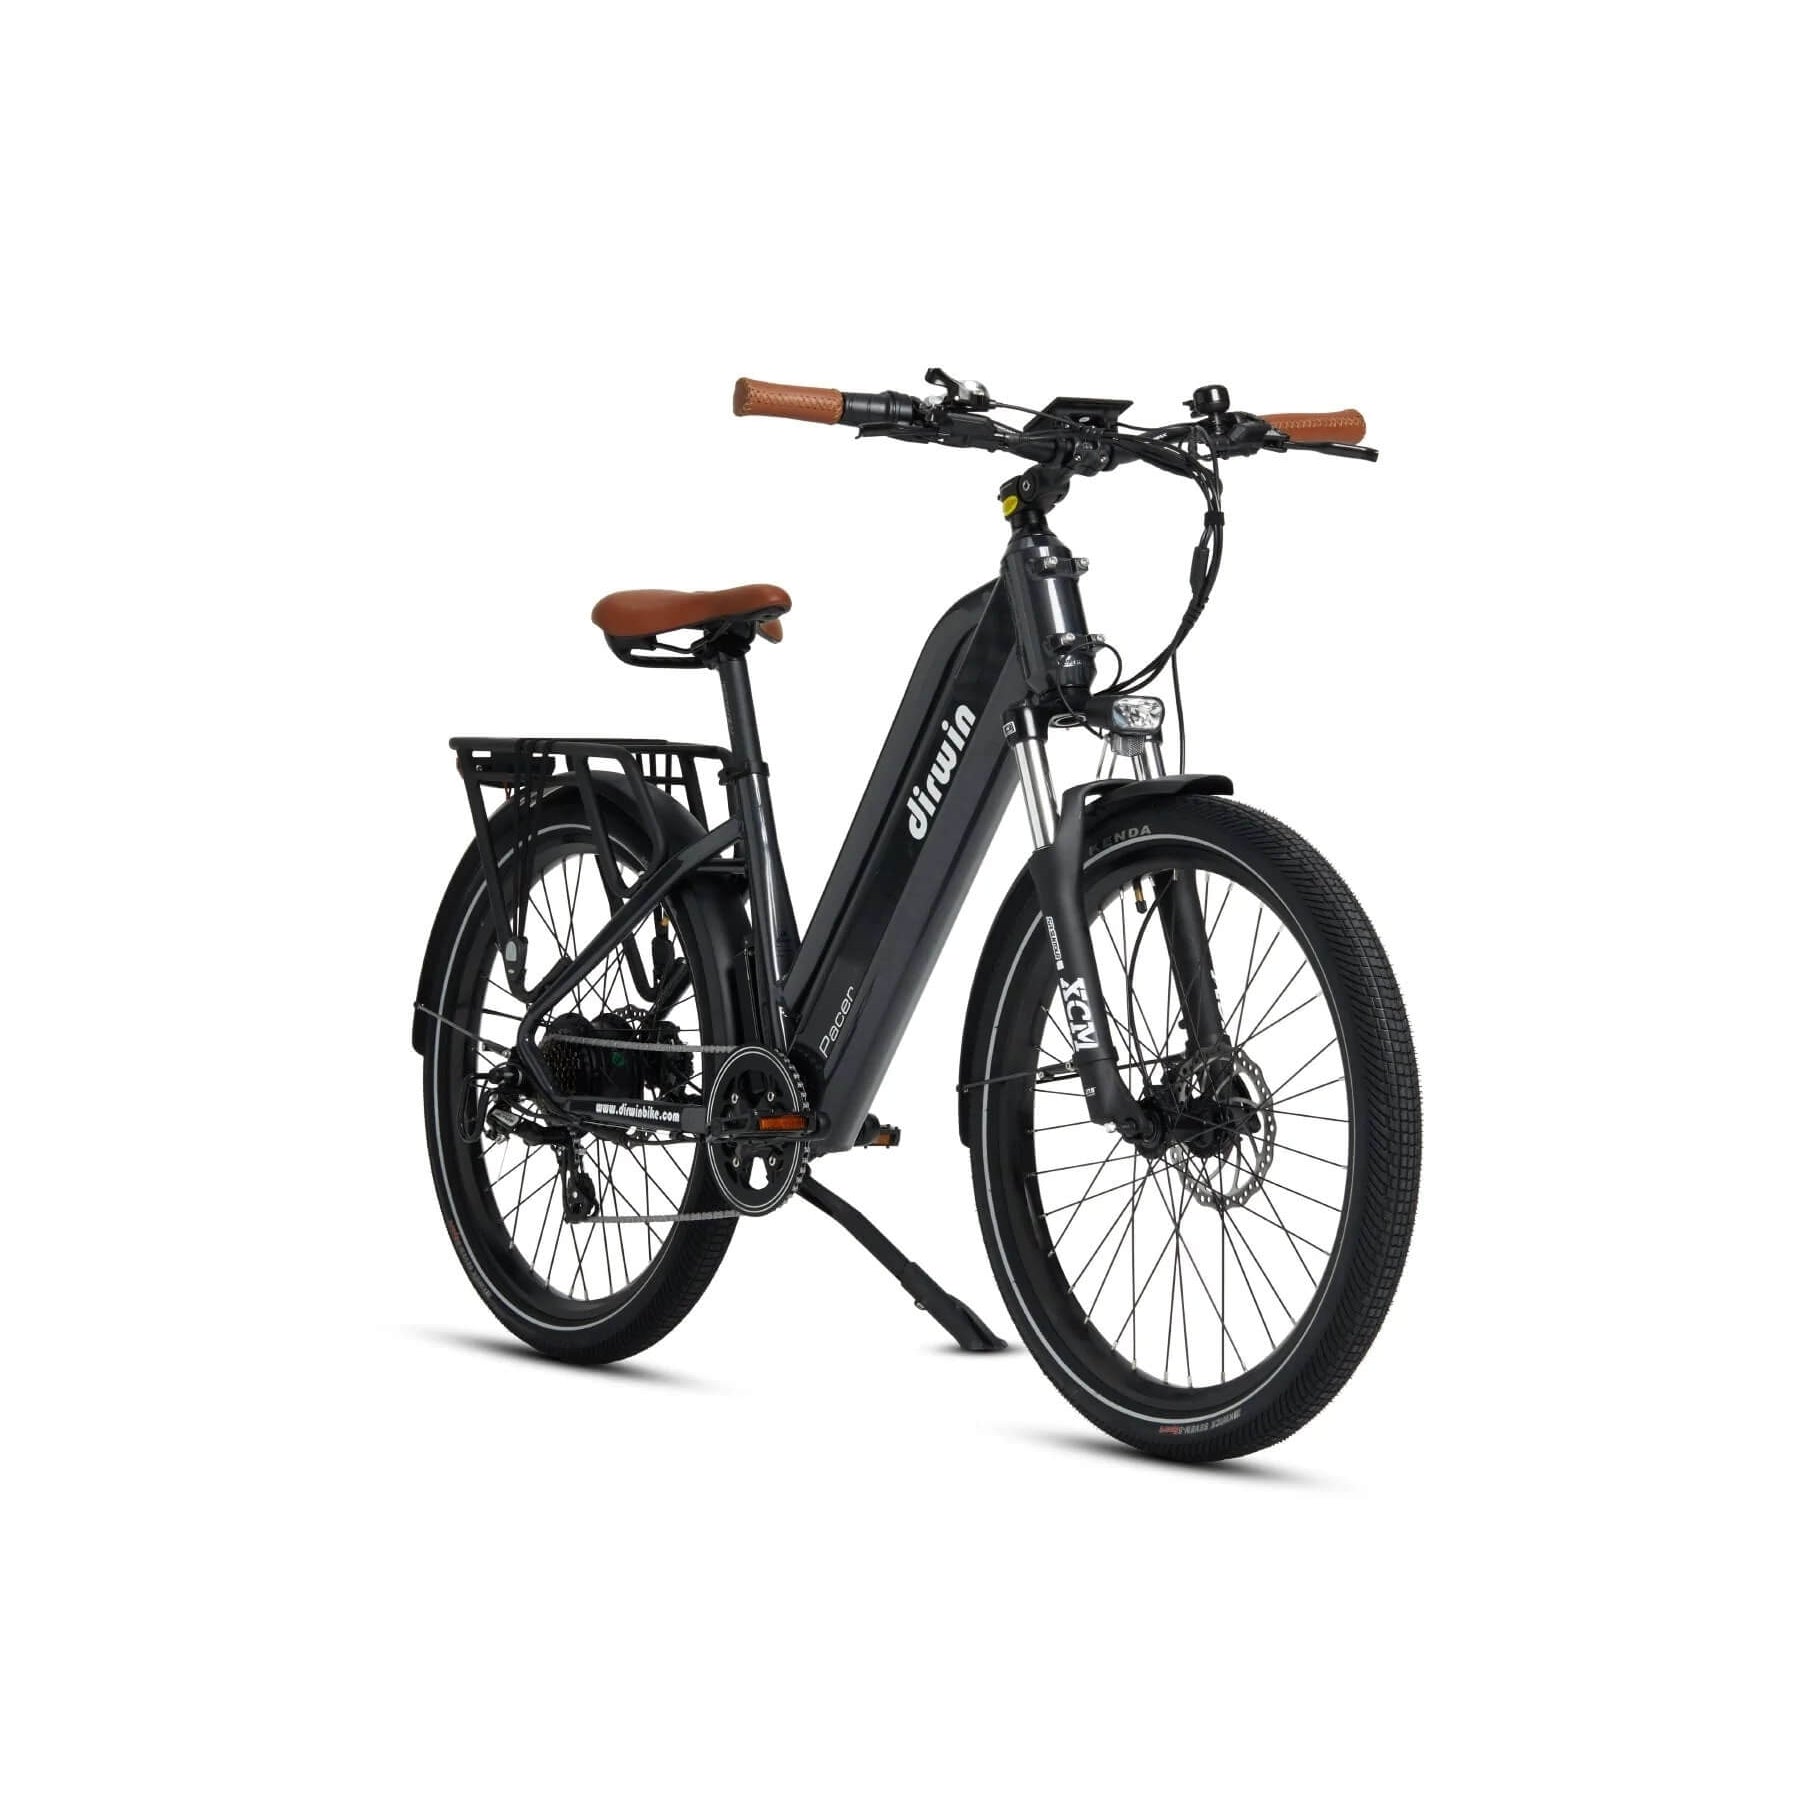 Dirwin-Pacer-500W-Commuter-Electric-Bike-Commuter-Dirwin-Bike-Gray